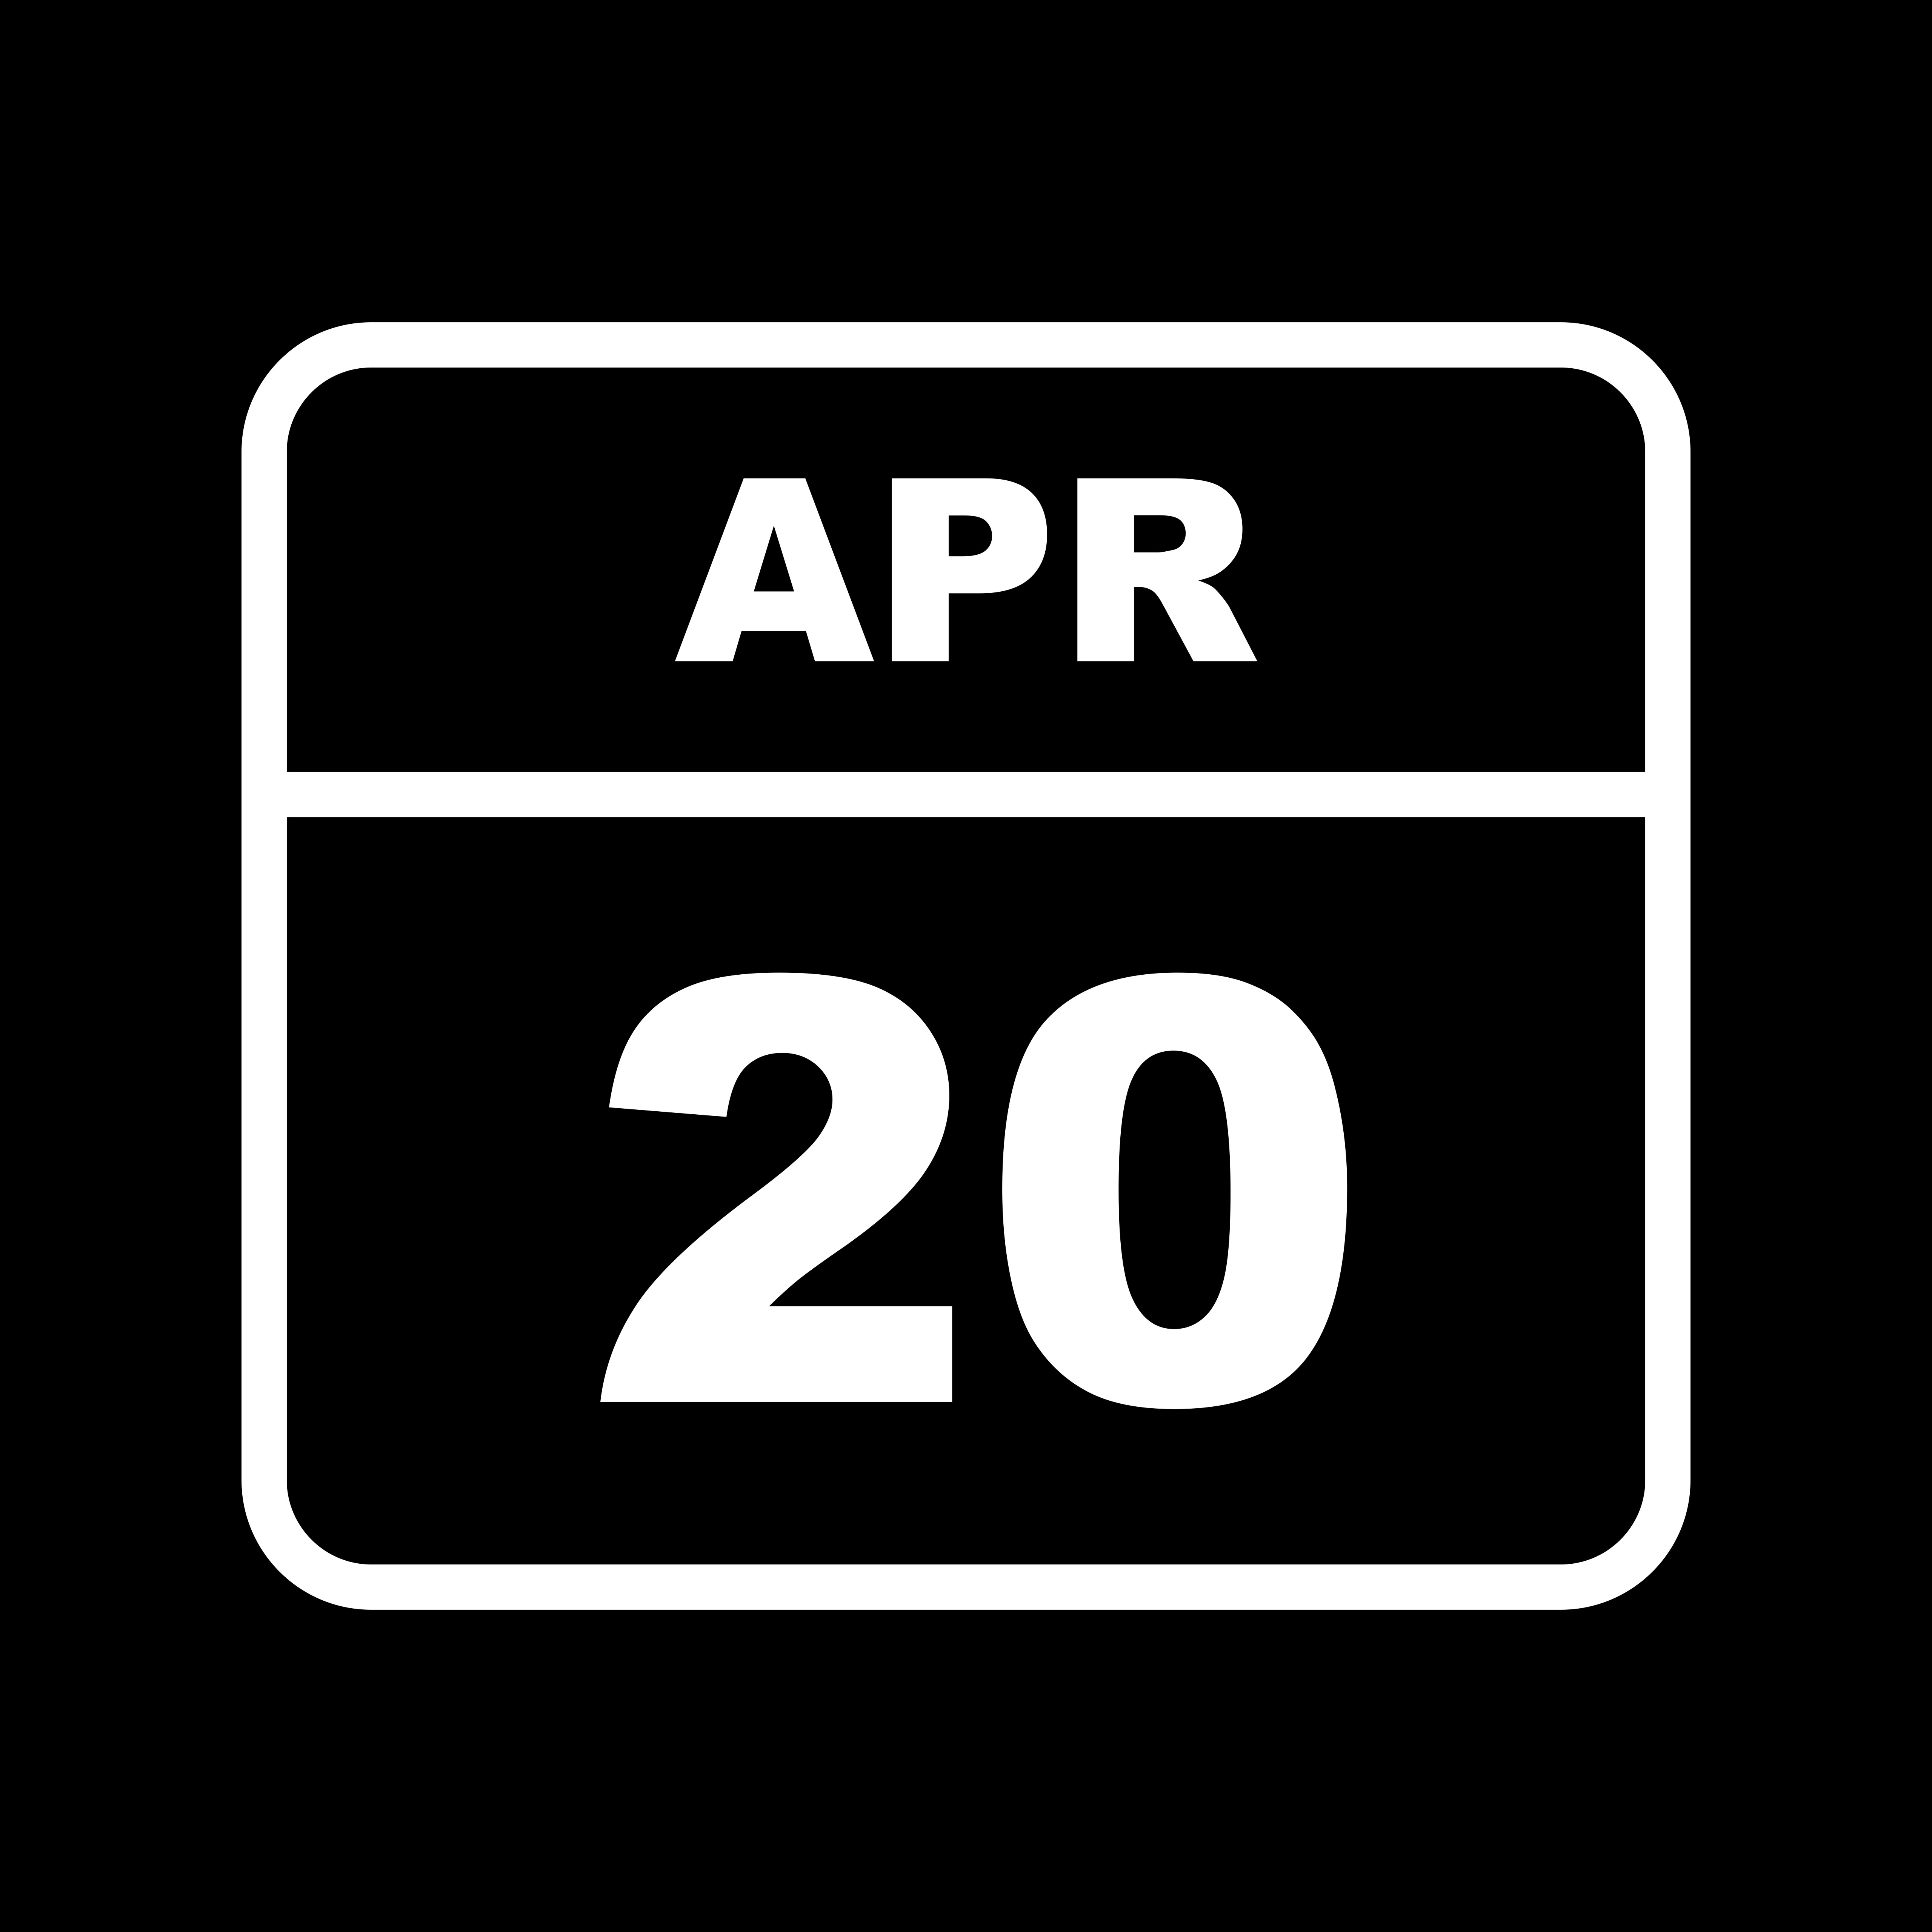 April 20th Date On A Single Day Calendar 488143 Vector Art At Vecteezy